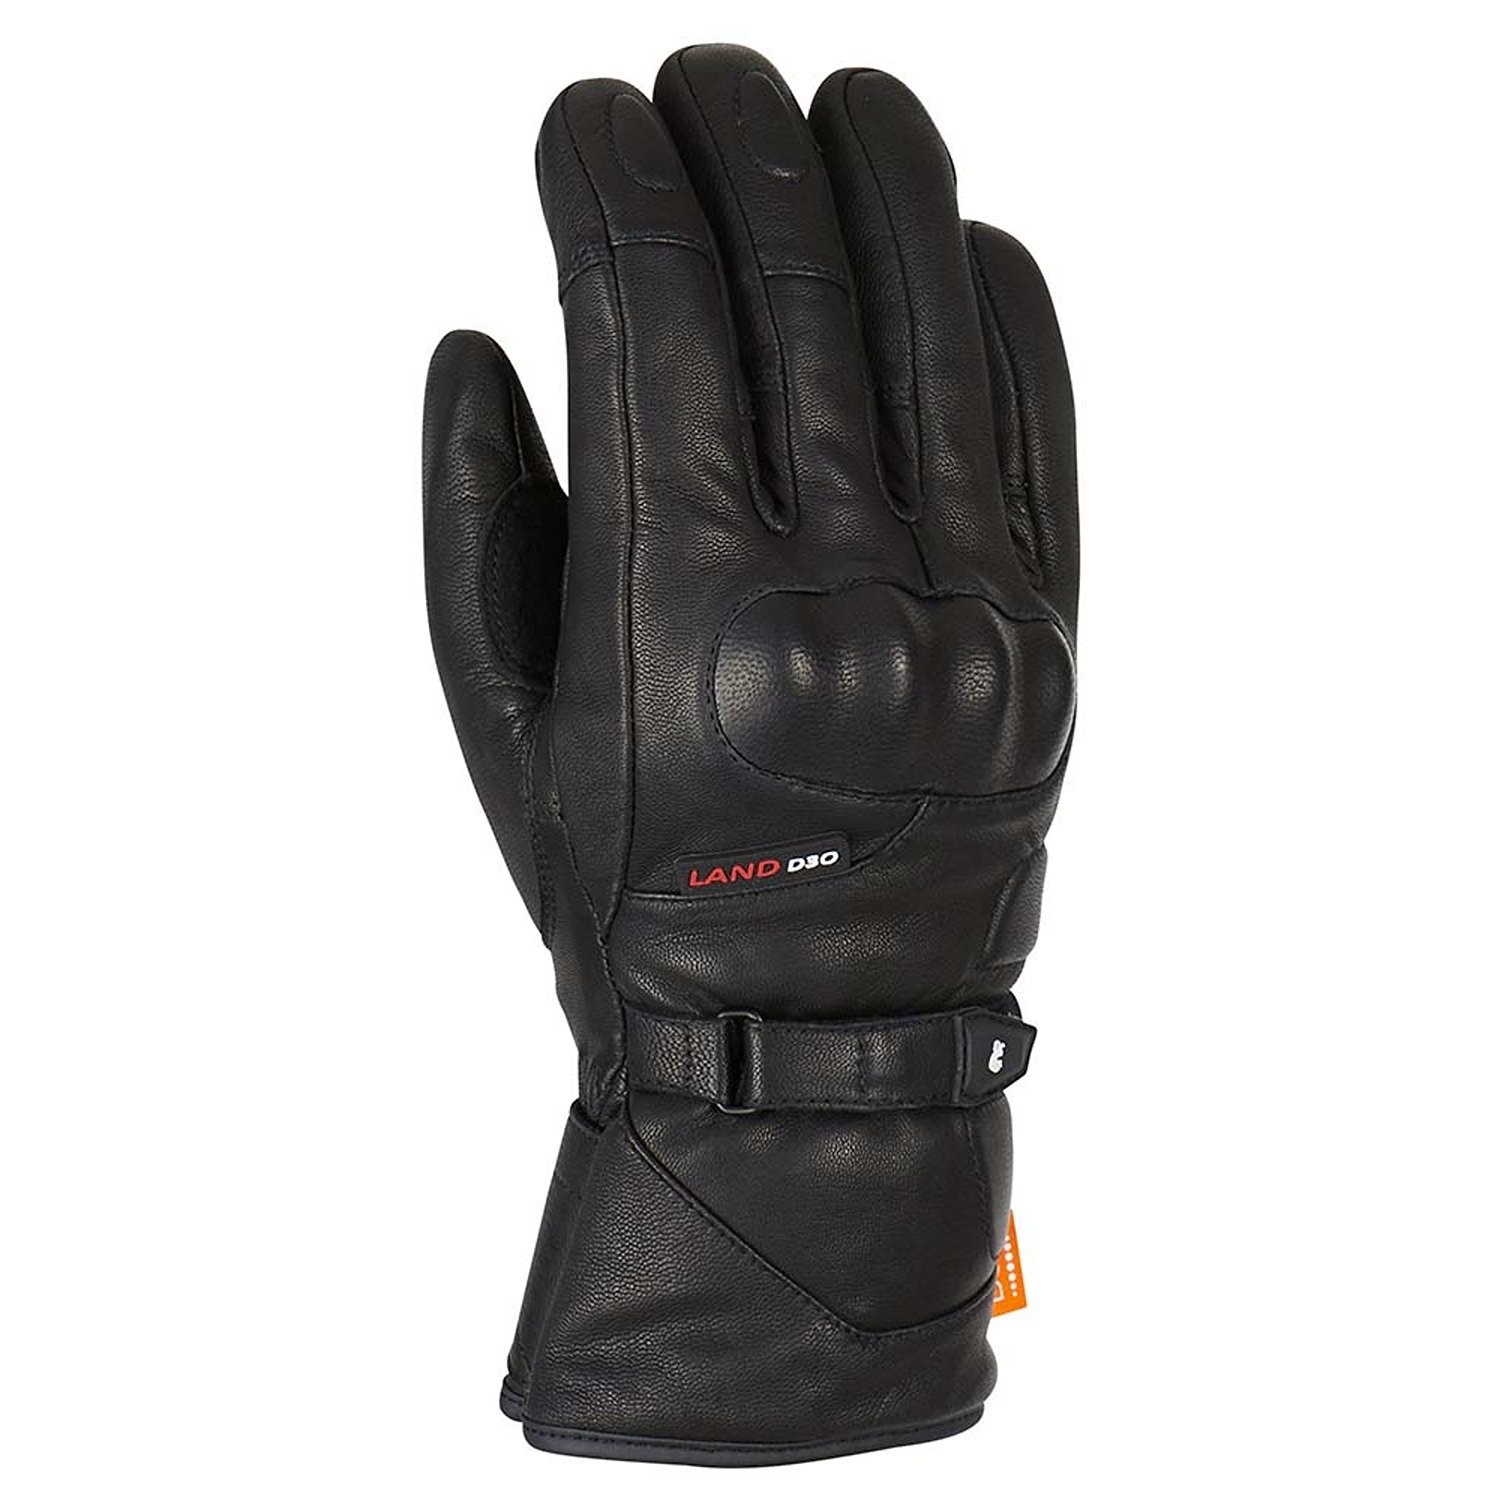 Image of Furygan Land DK D30 Gloves Black Size L ID 3435980358563